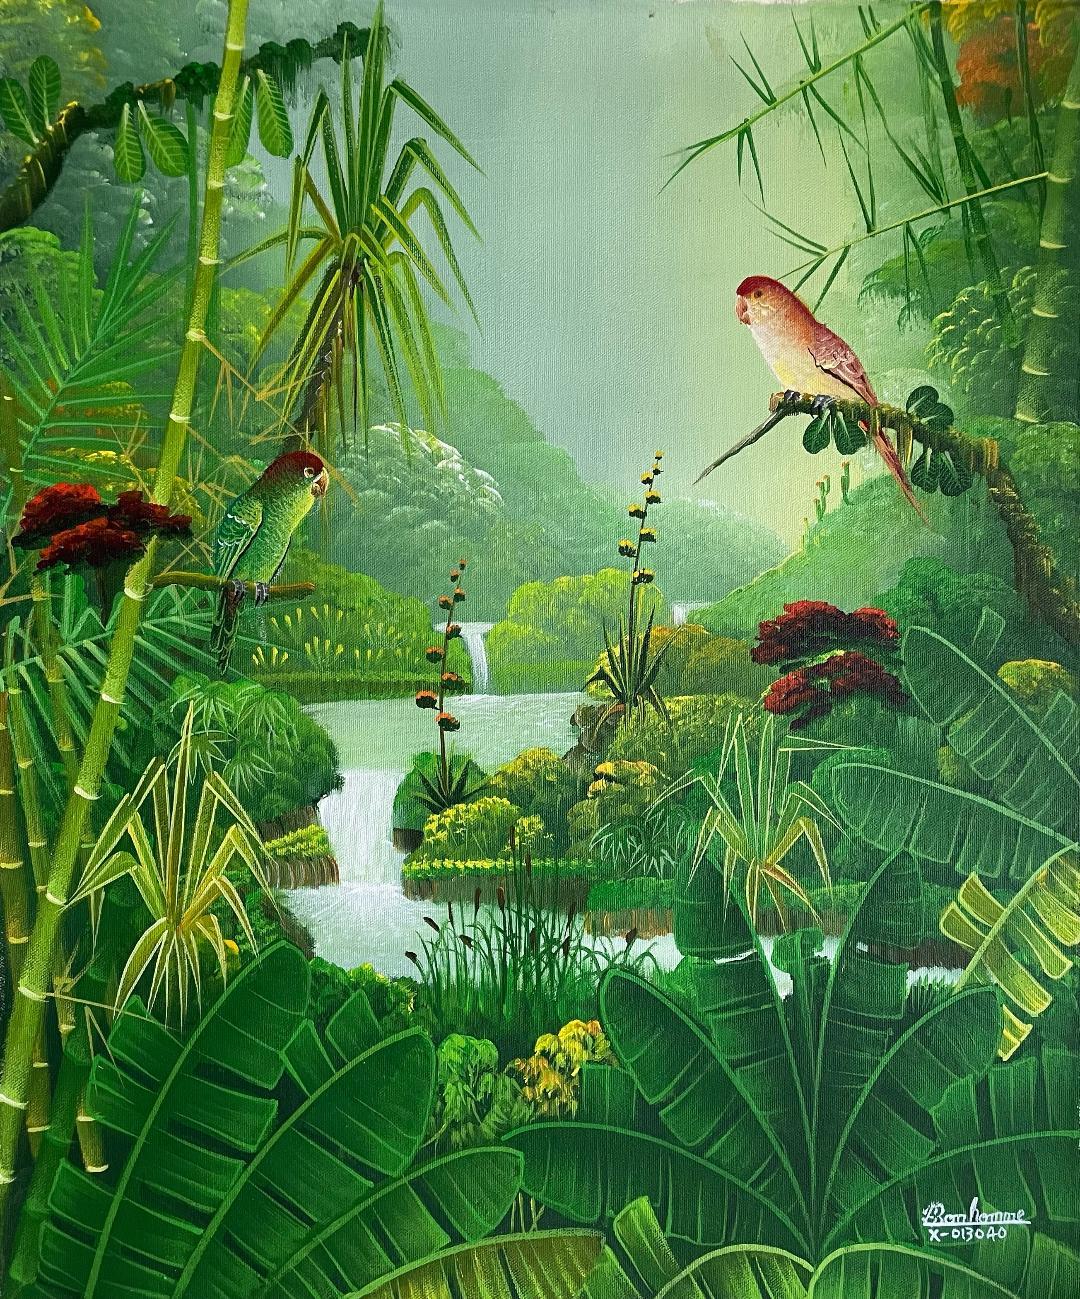 Albott Bonhomme Animal Painting - Green, Yellow Birds & Cascade - Original Contemporary Painting